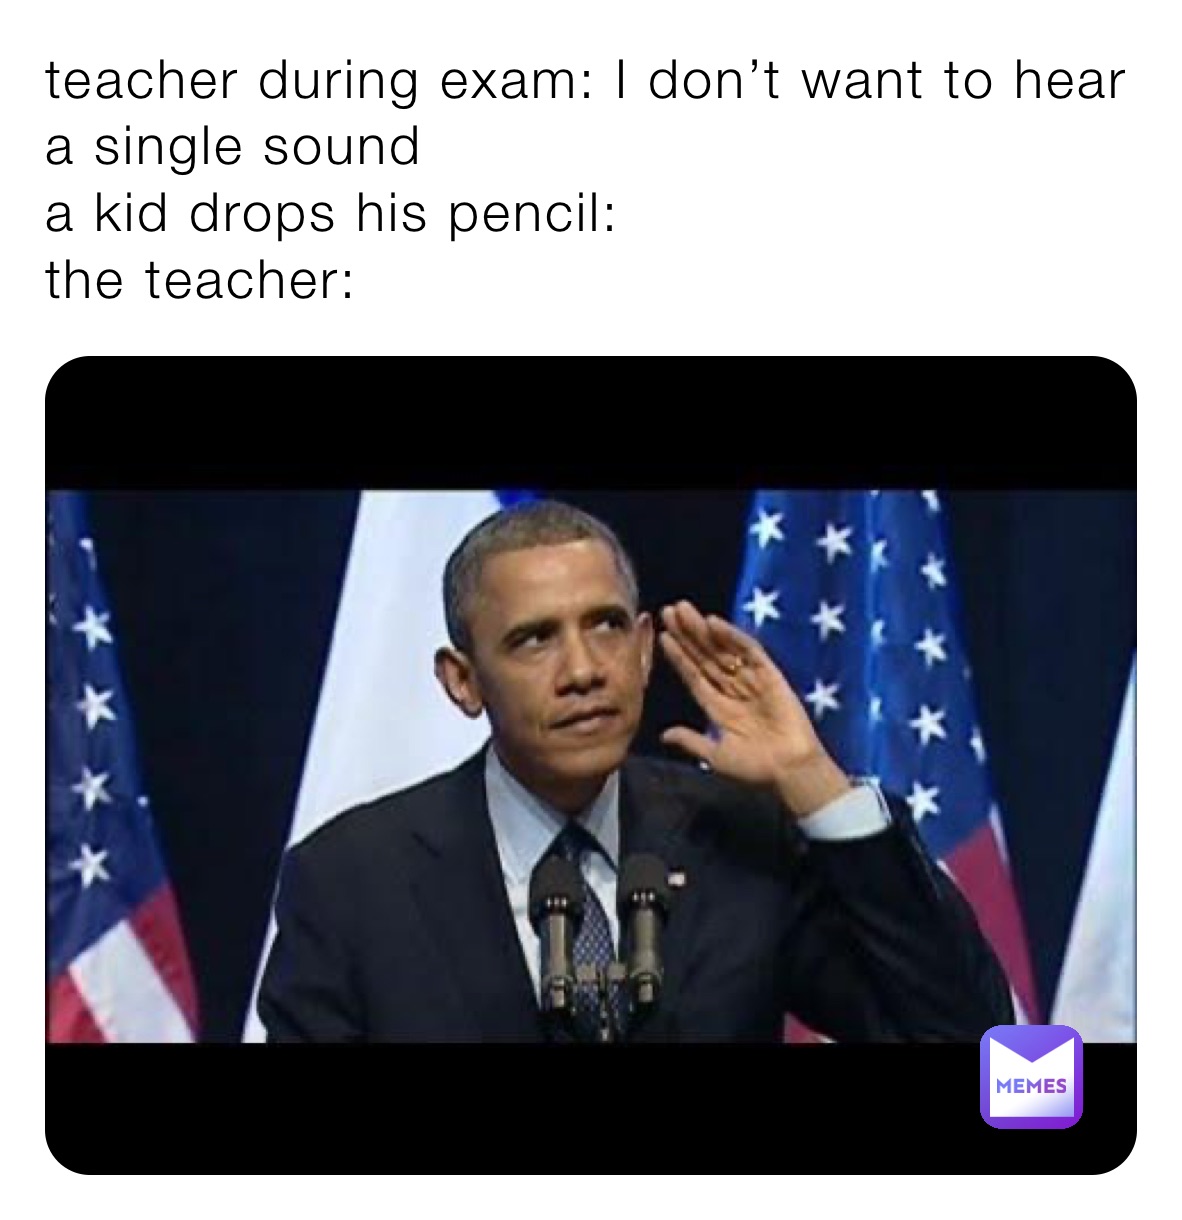 teacher during exam: I don’t want to hear a single sound 
a kid drops his pencil: 
the teacher: 